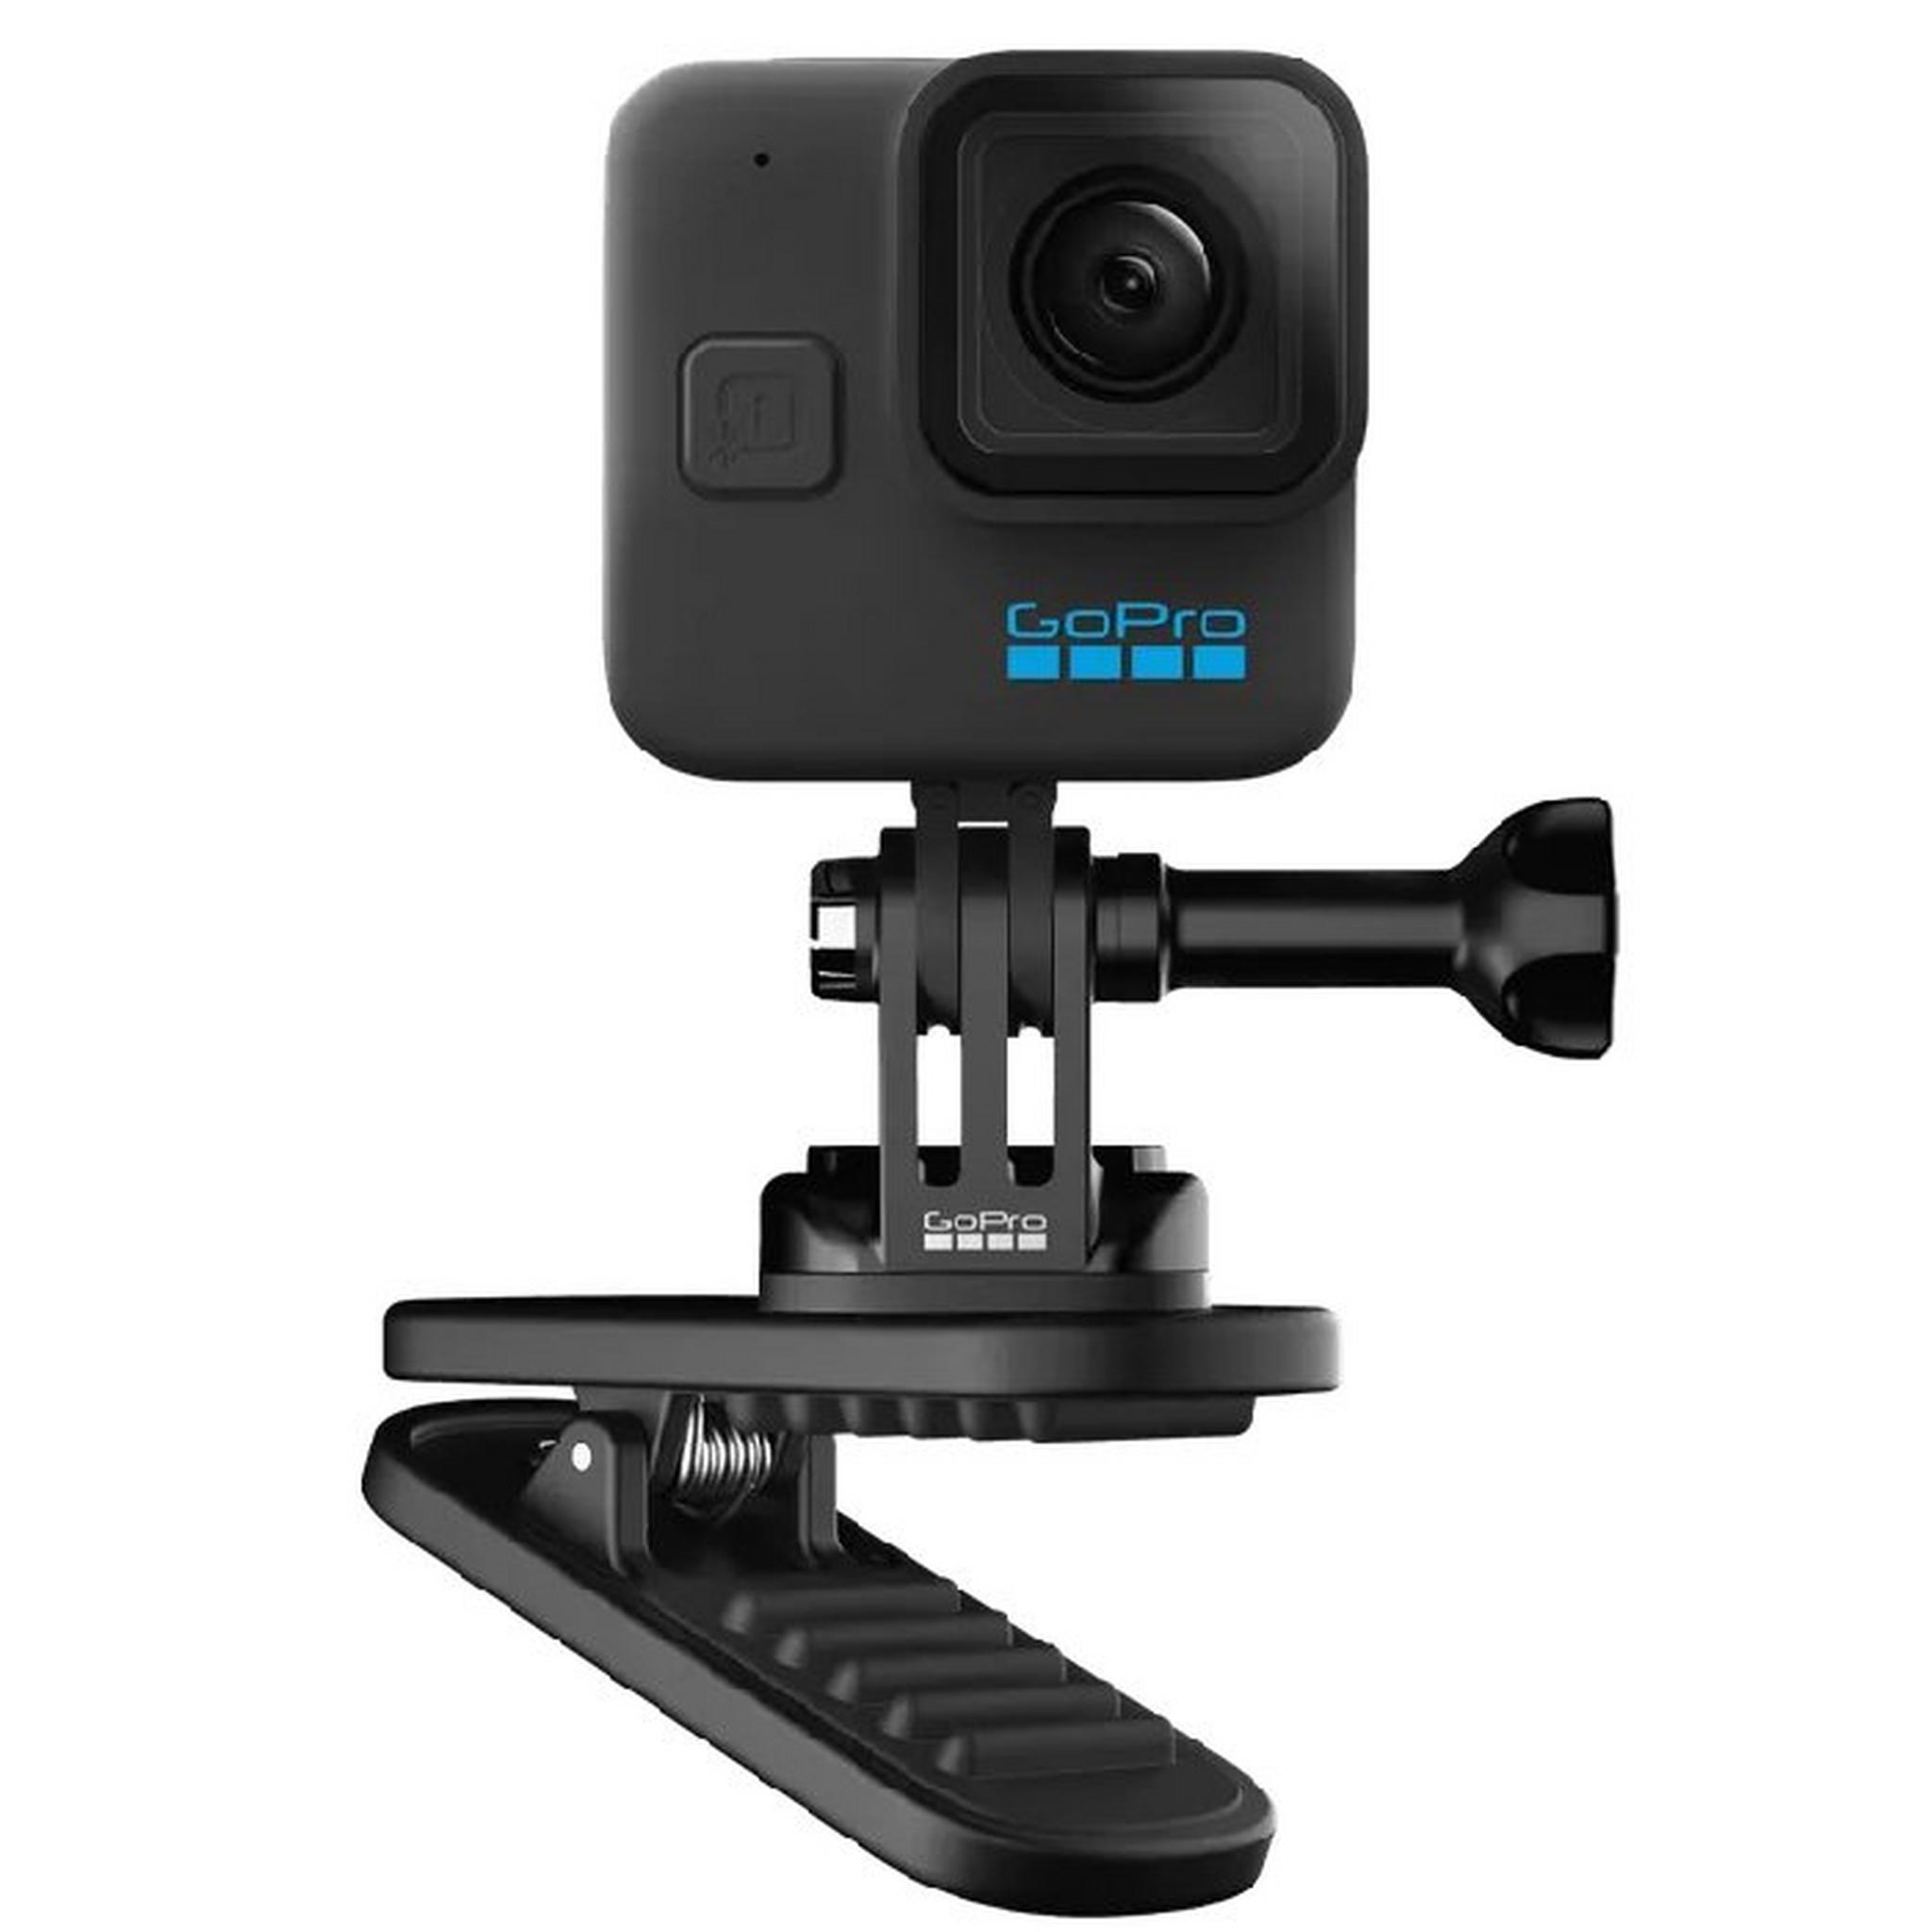 GoPro Filming Travel Kit, AKTTR-002 – Black